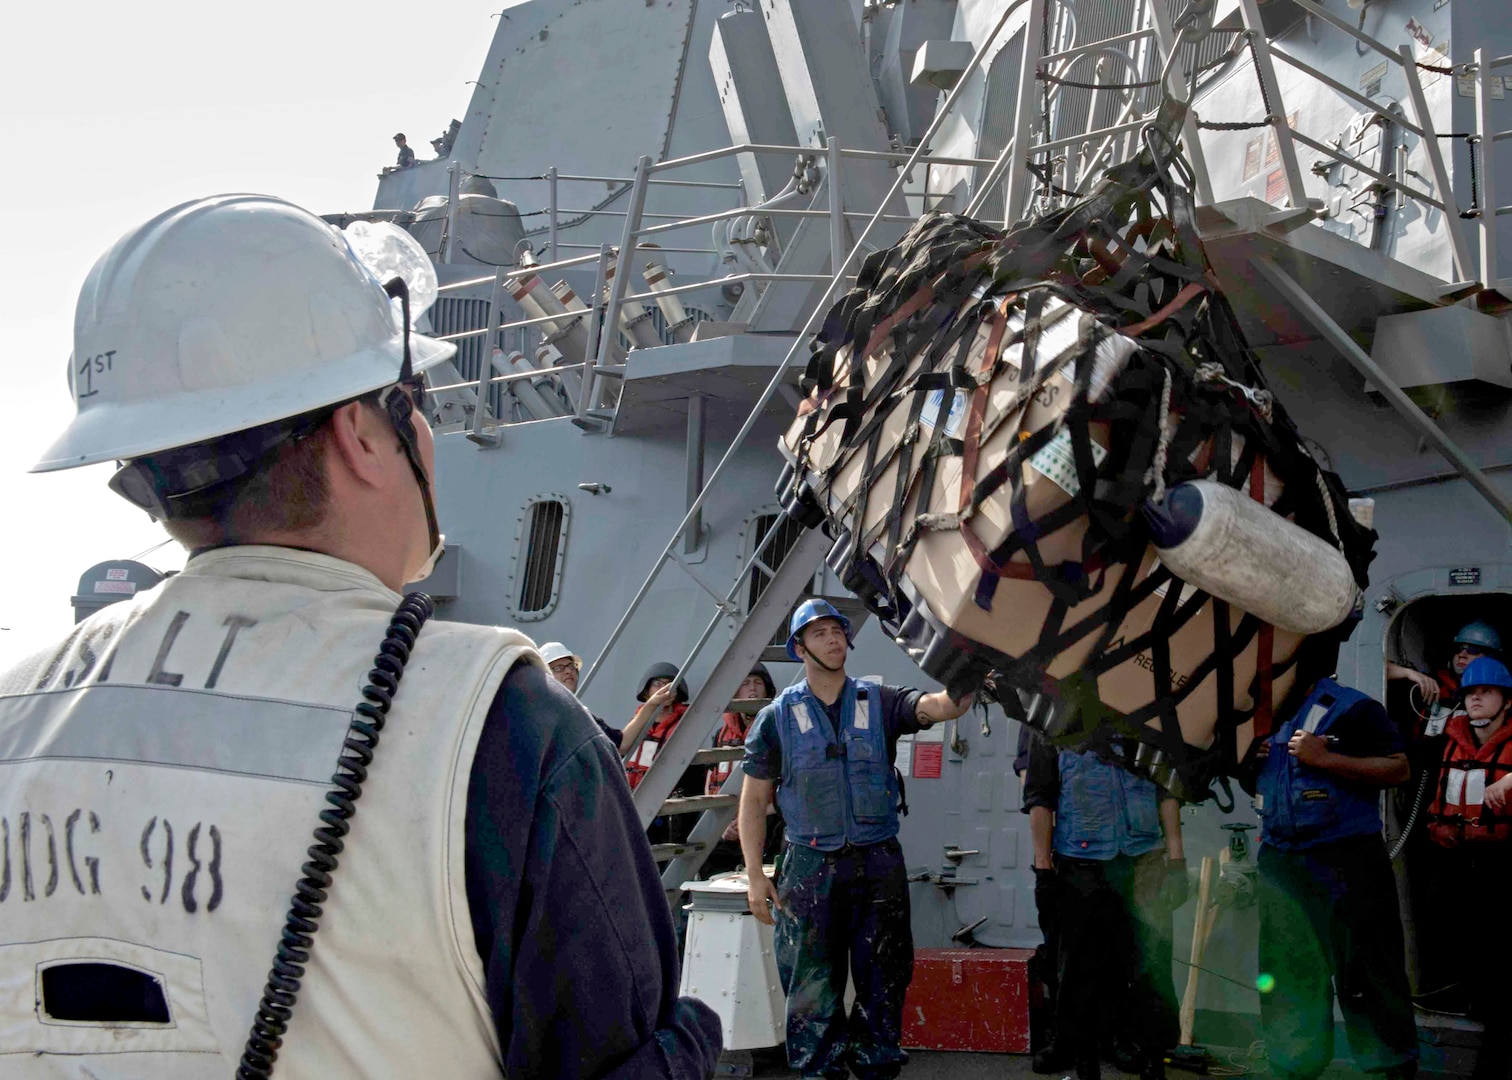 Image of sailors onboard a ship using a hook lift a cargo net of supplies.